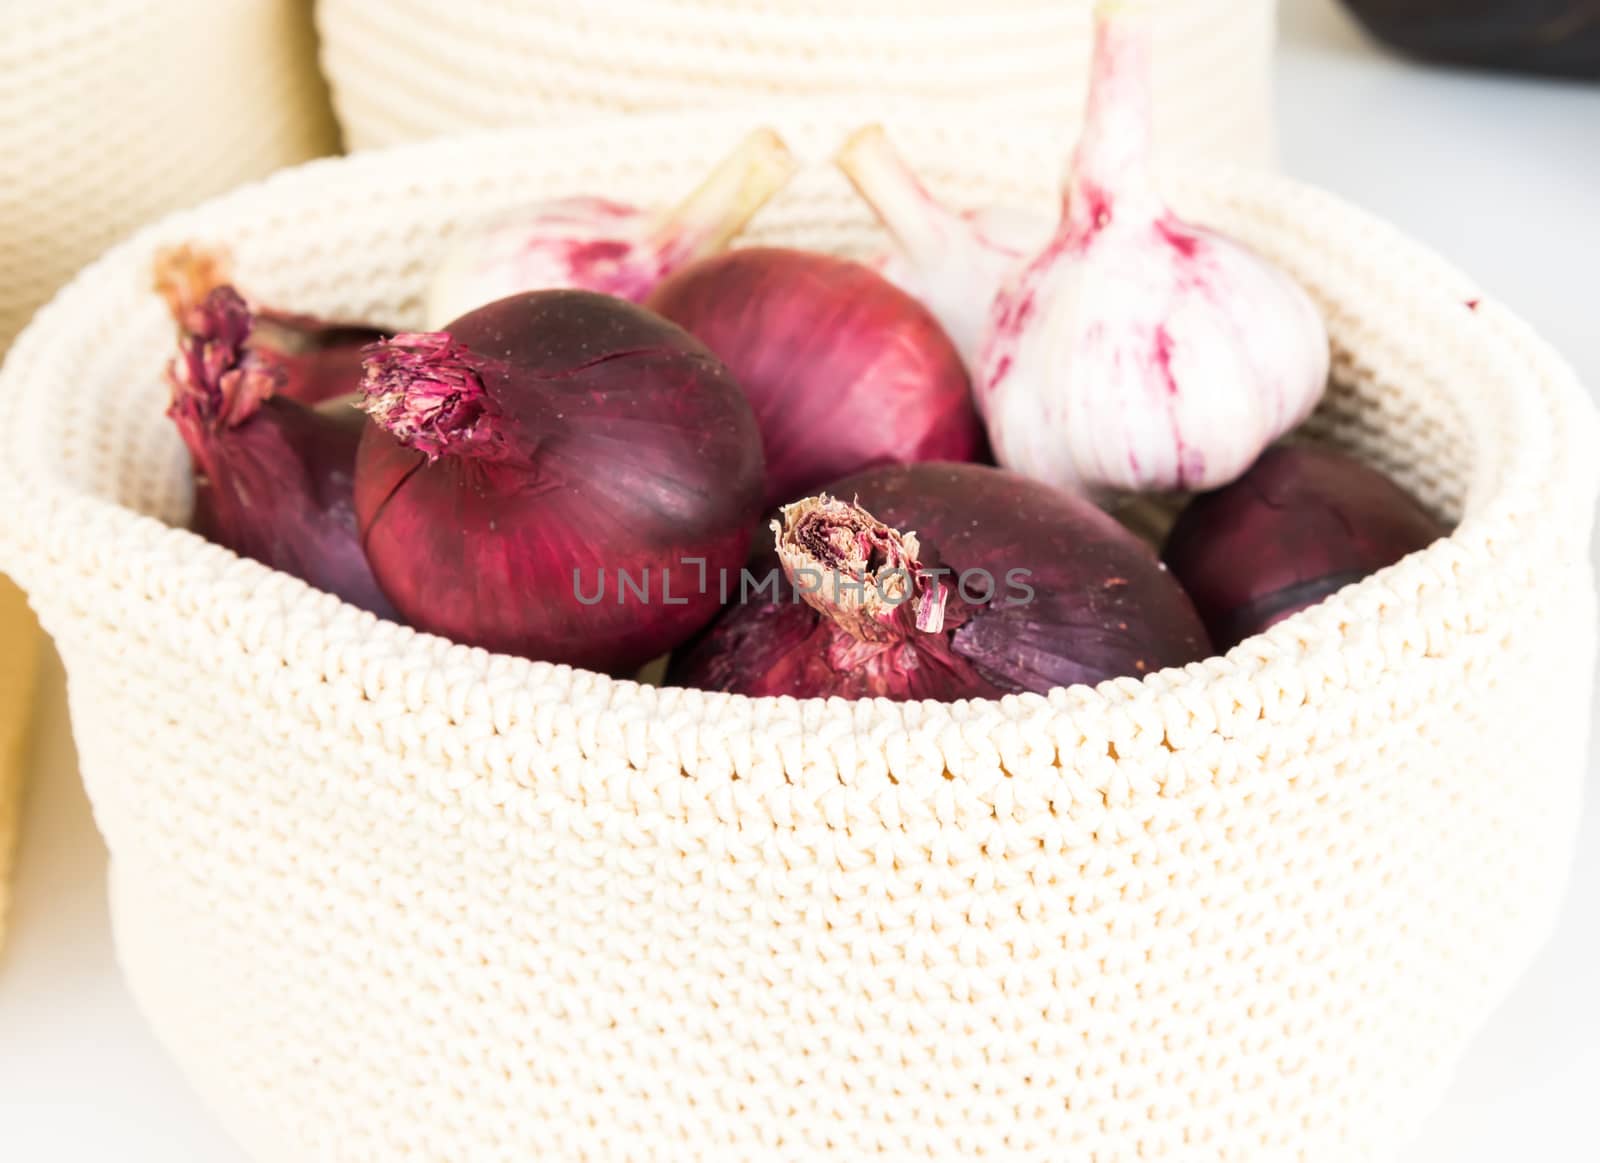 red onions in a wicker basket close-up by vlaru